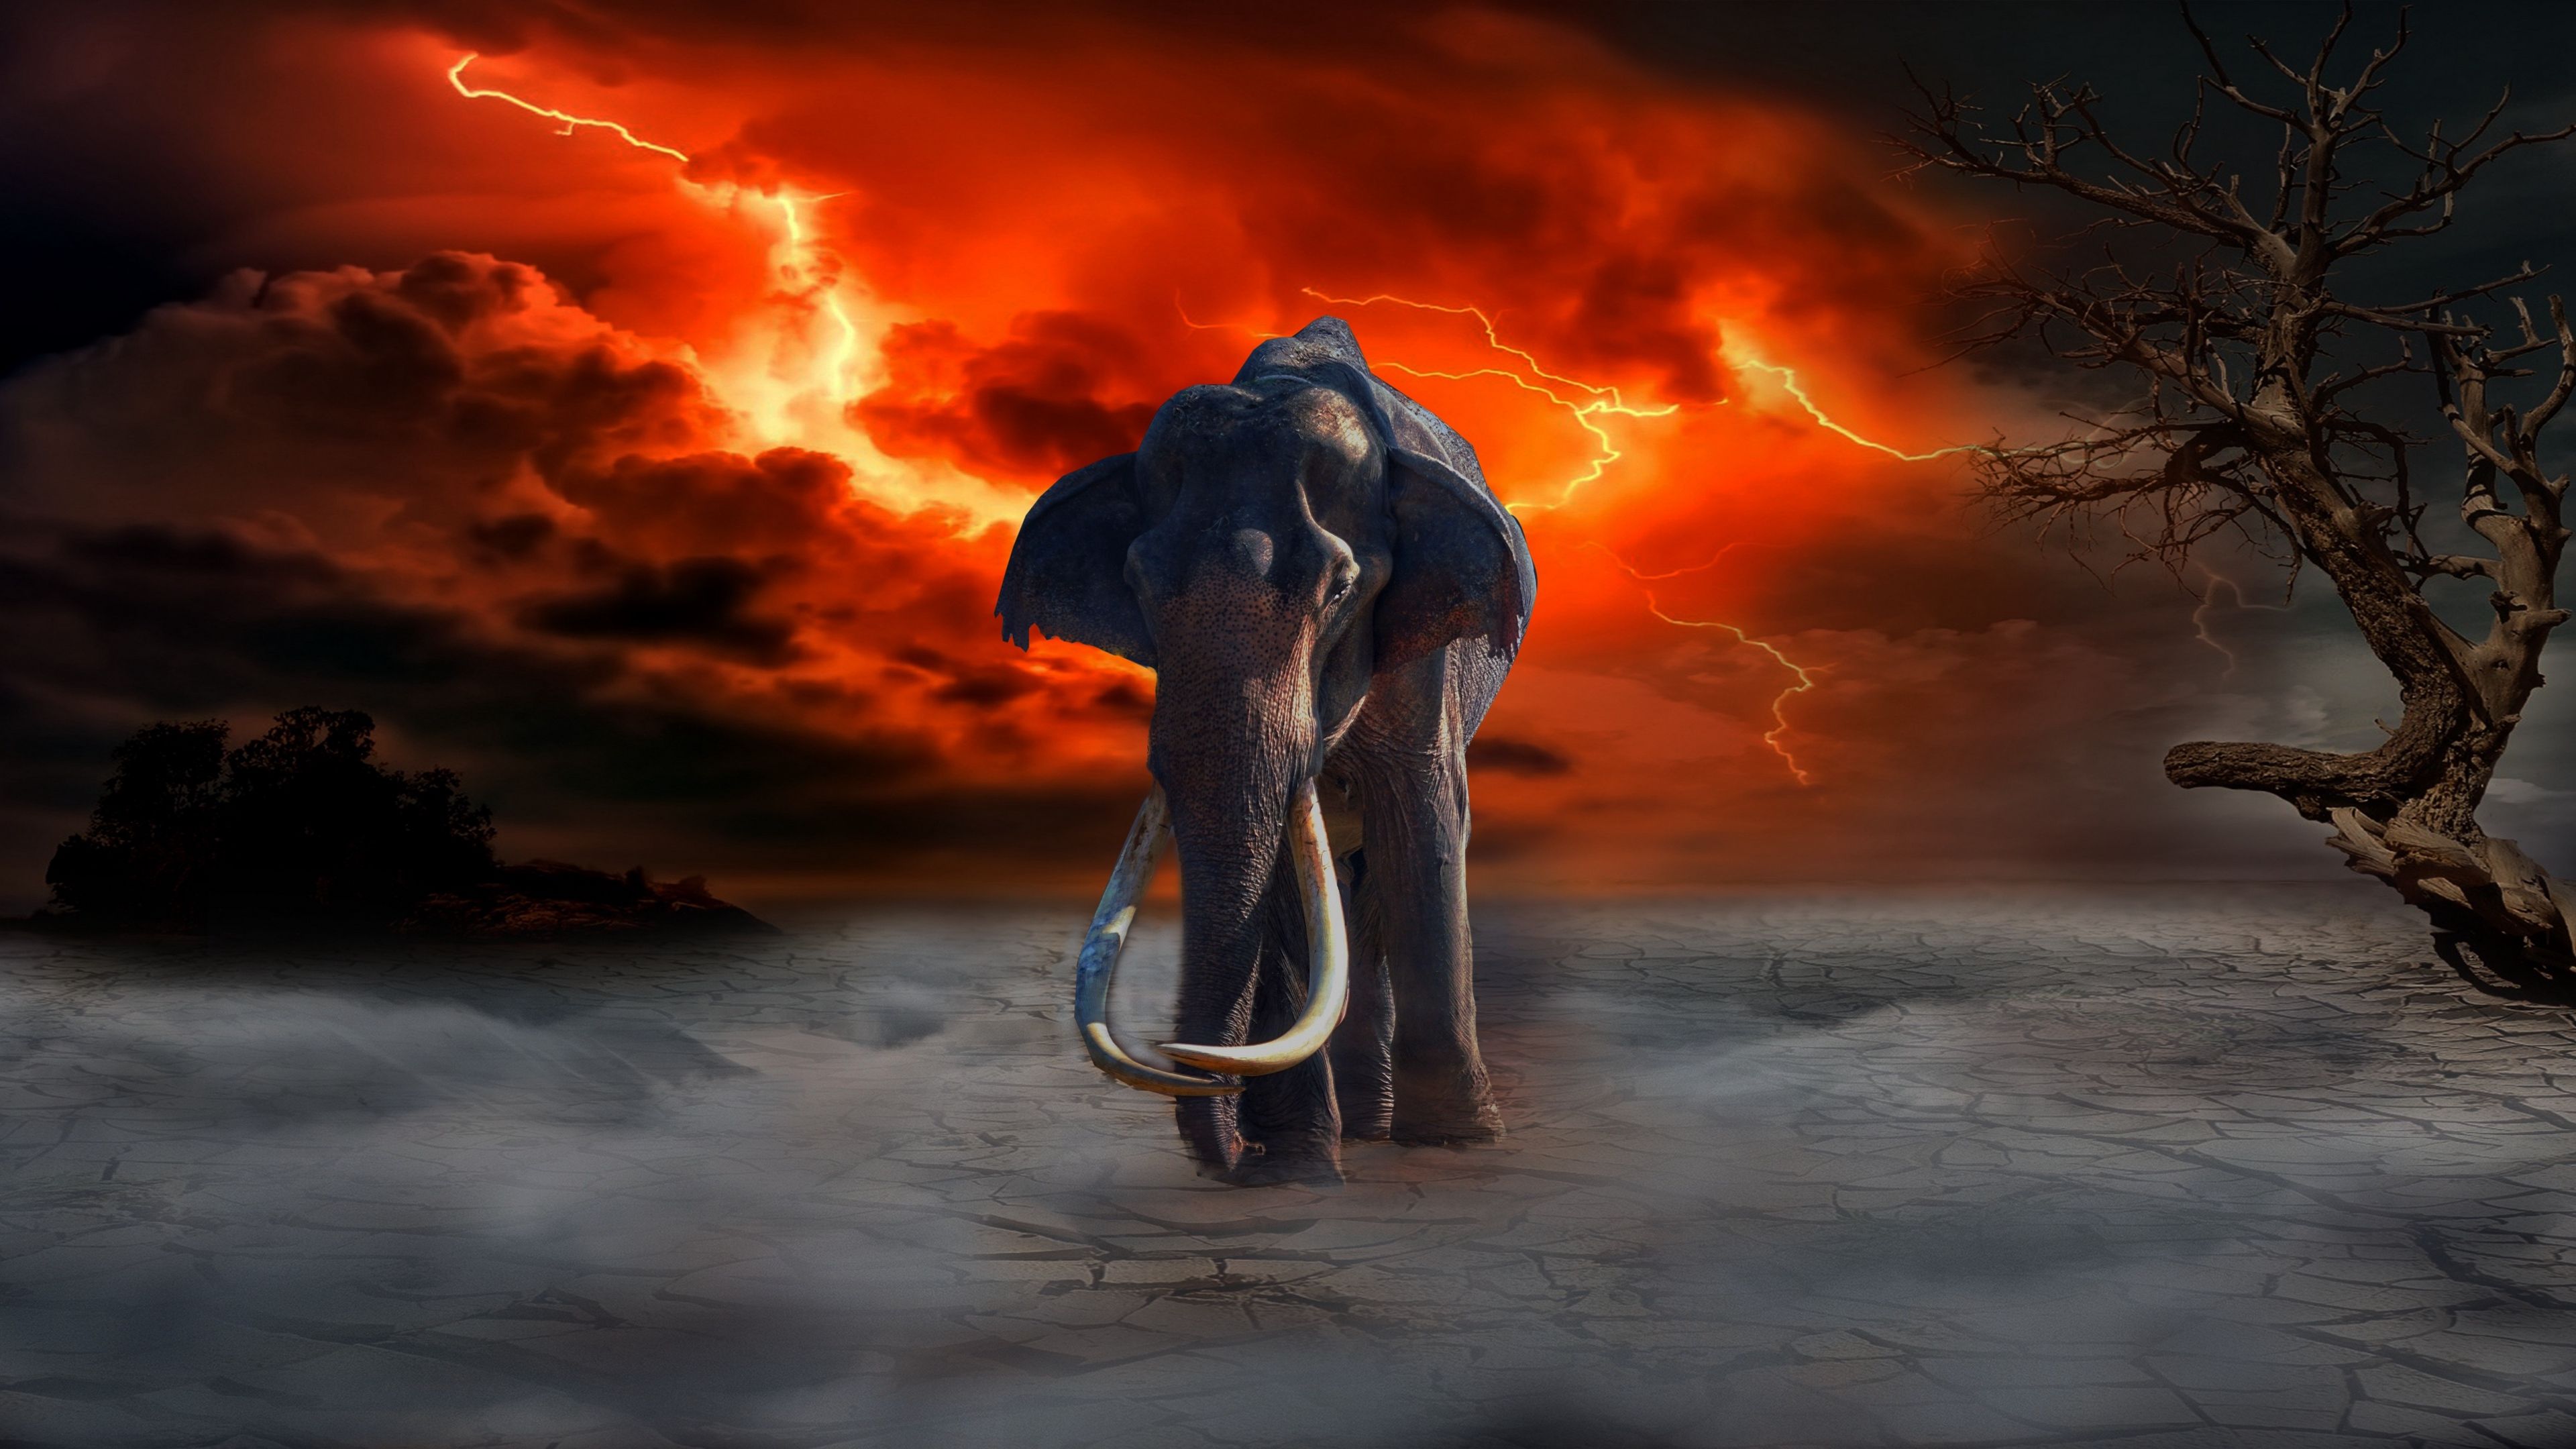 Wallpaper 4k elephant, lightning, photohop, fantasy 4k elephant, Lightning, photohop